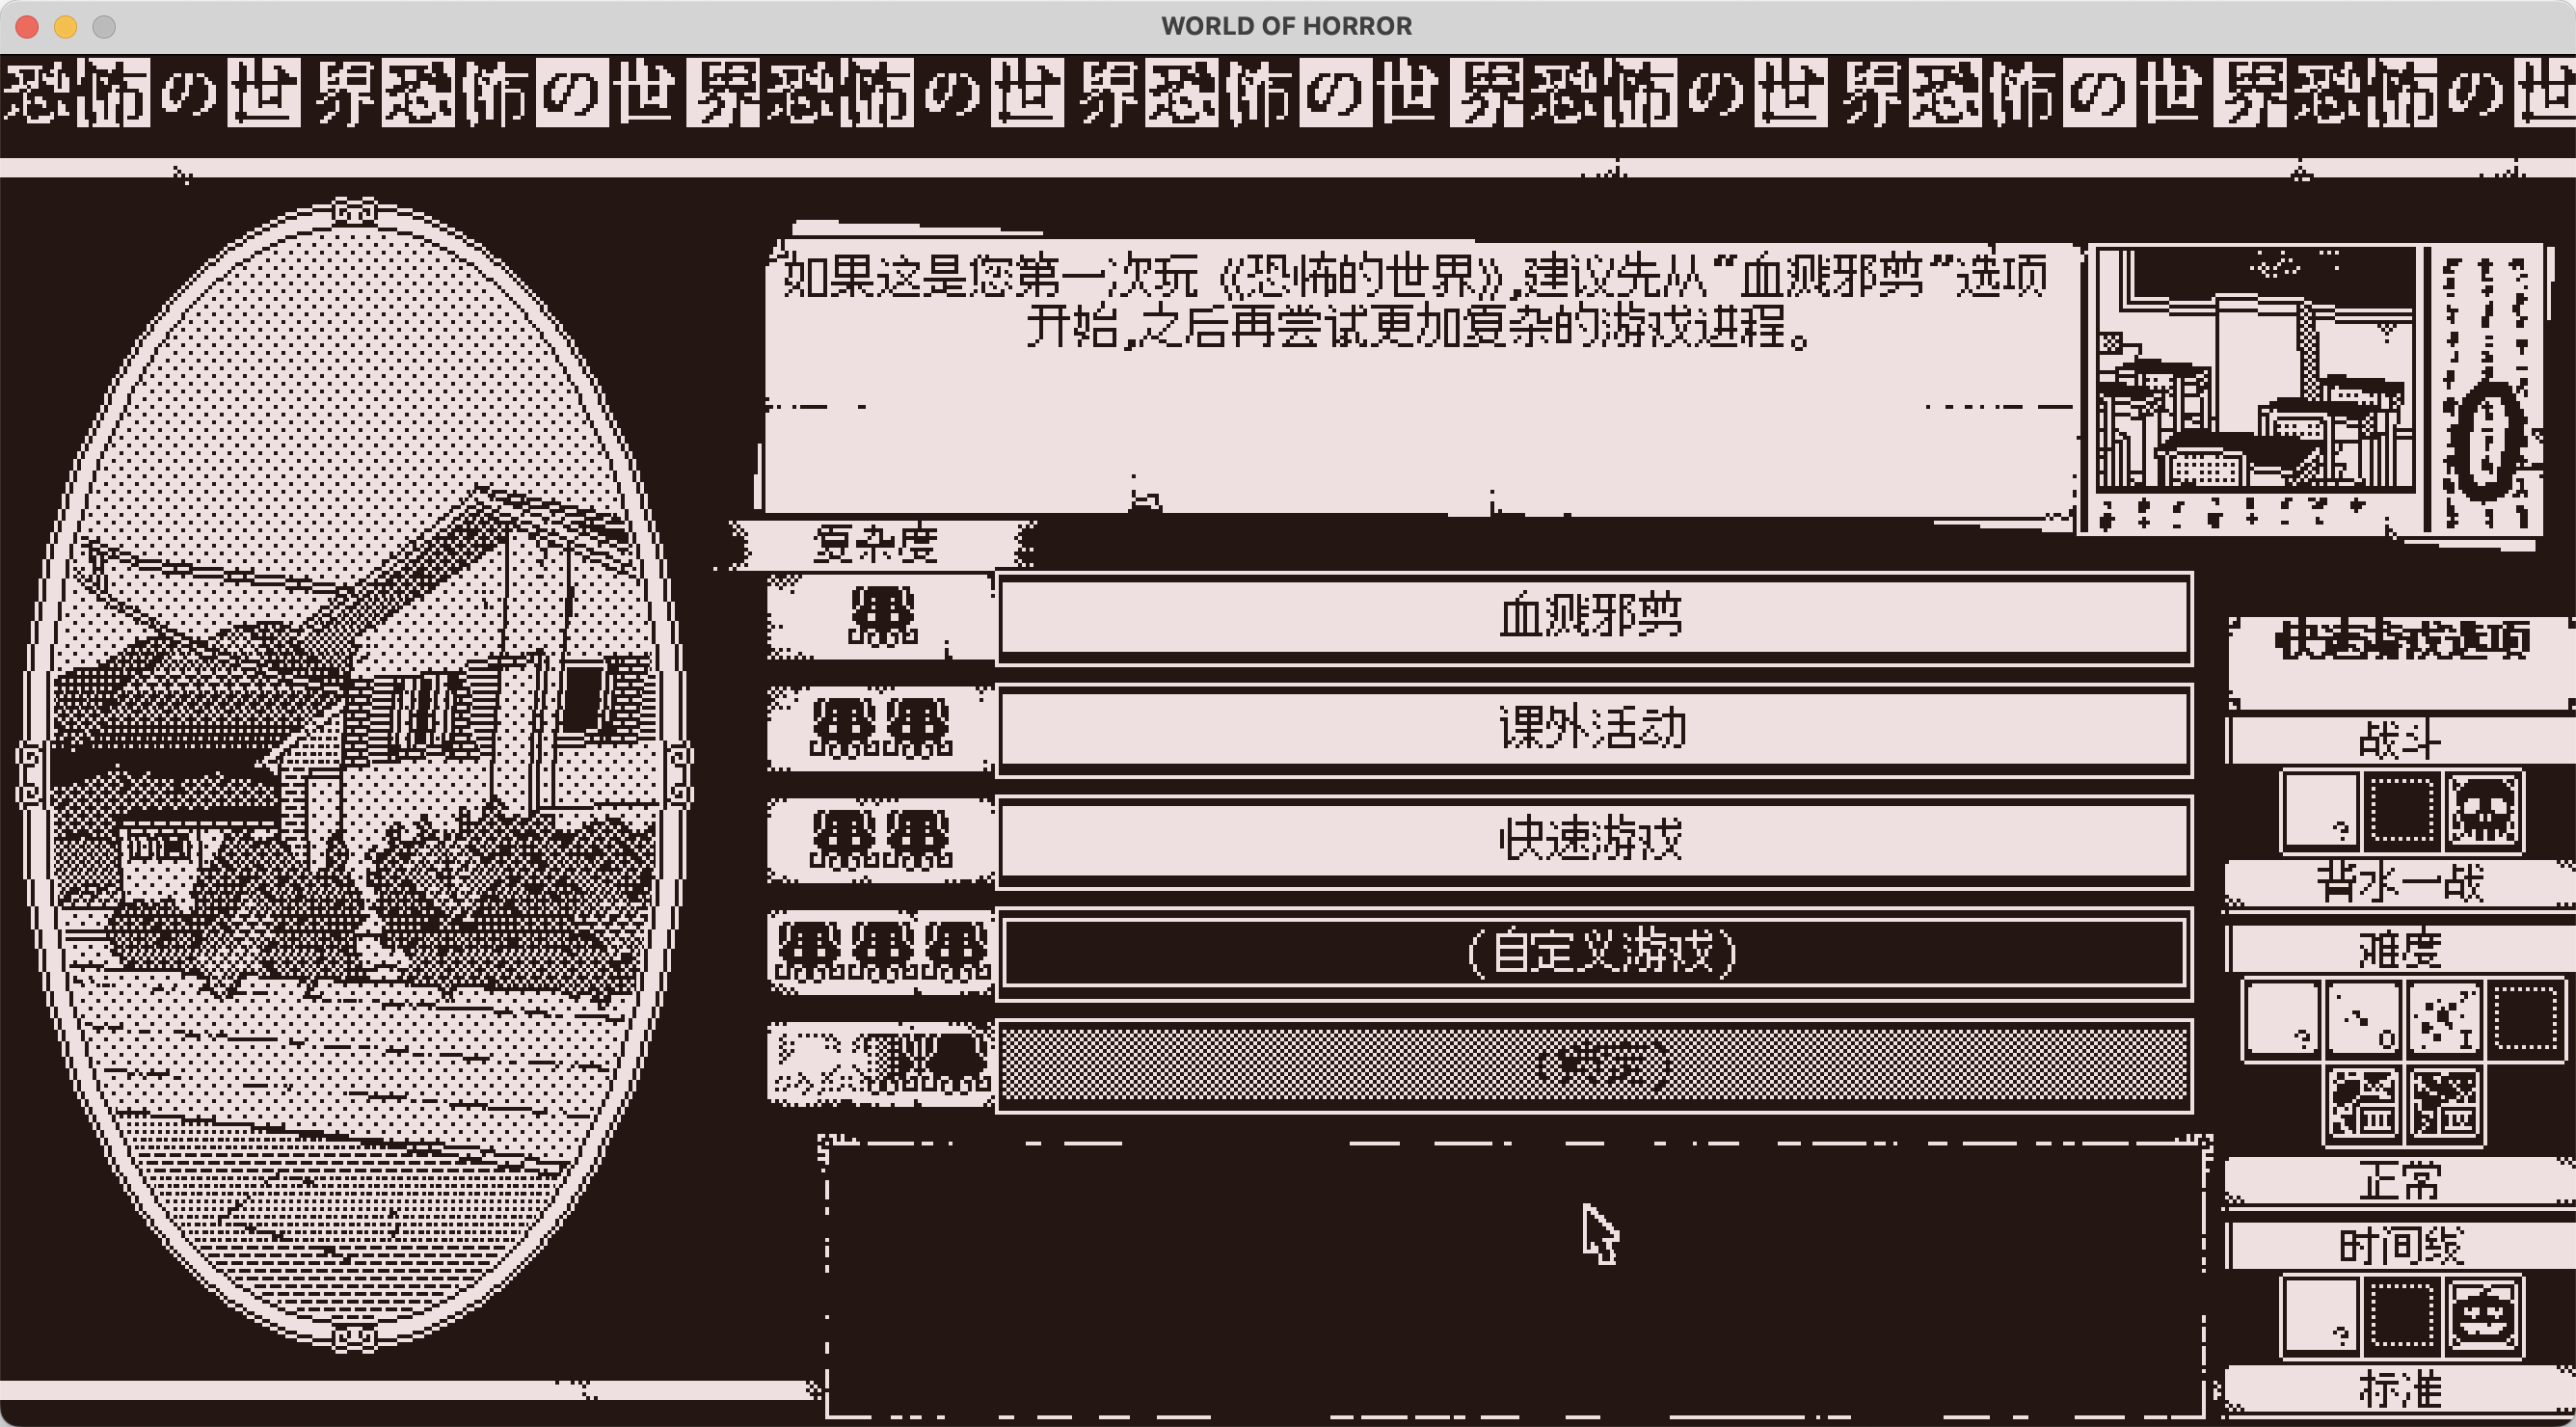 恐怖的世界 for Mac v1.0 WORLD OF HORROR 中文原生版 苹果电脑